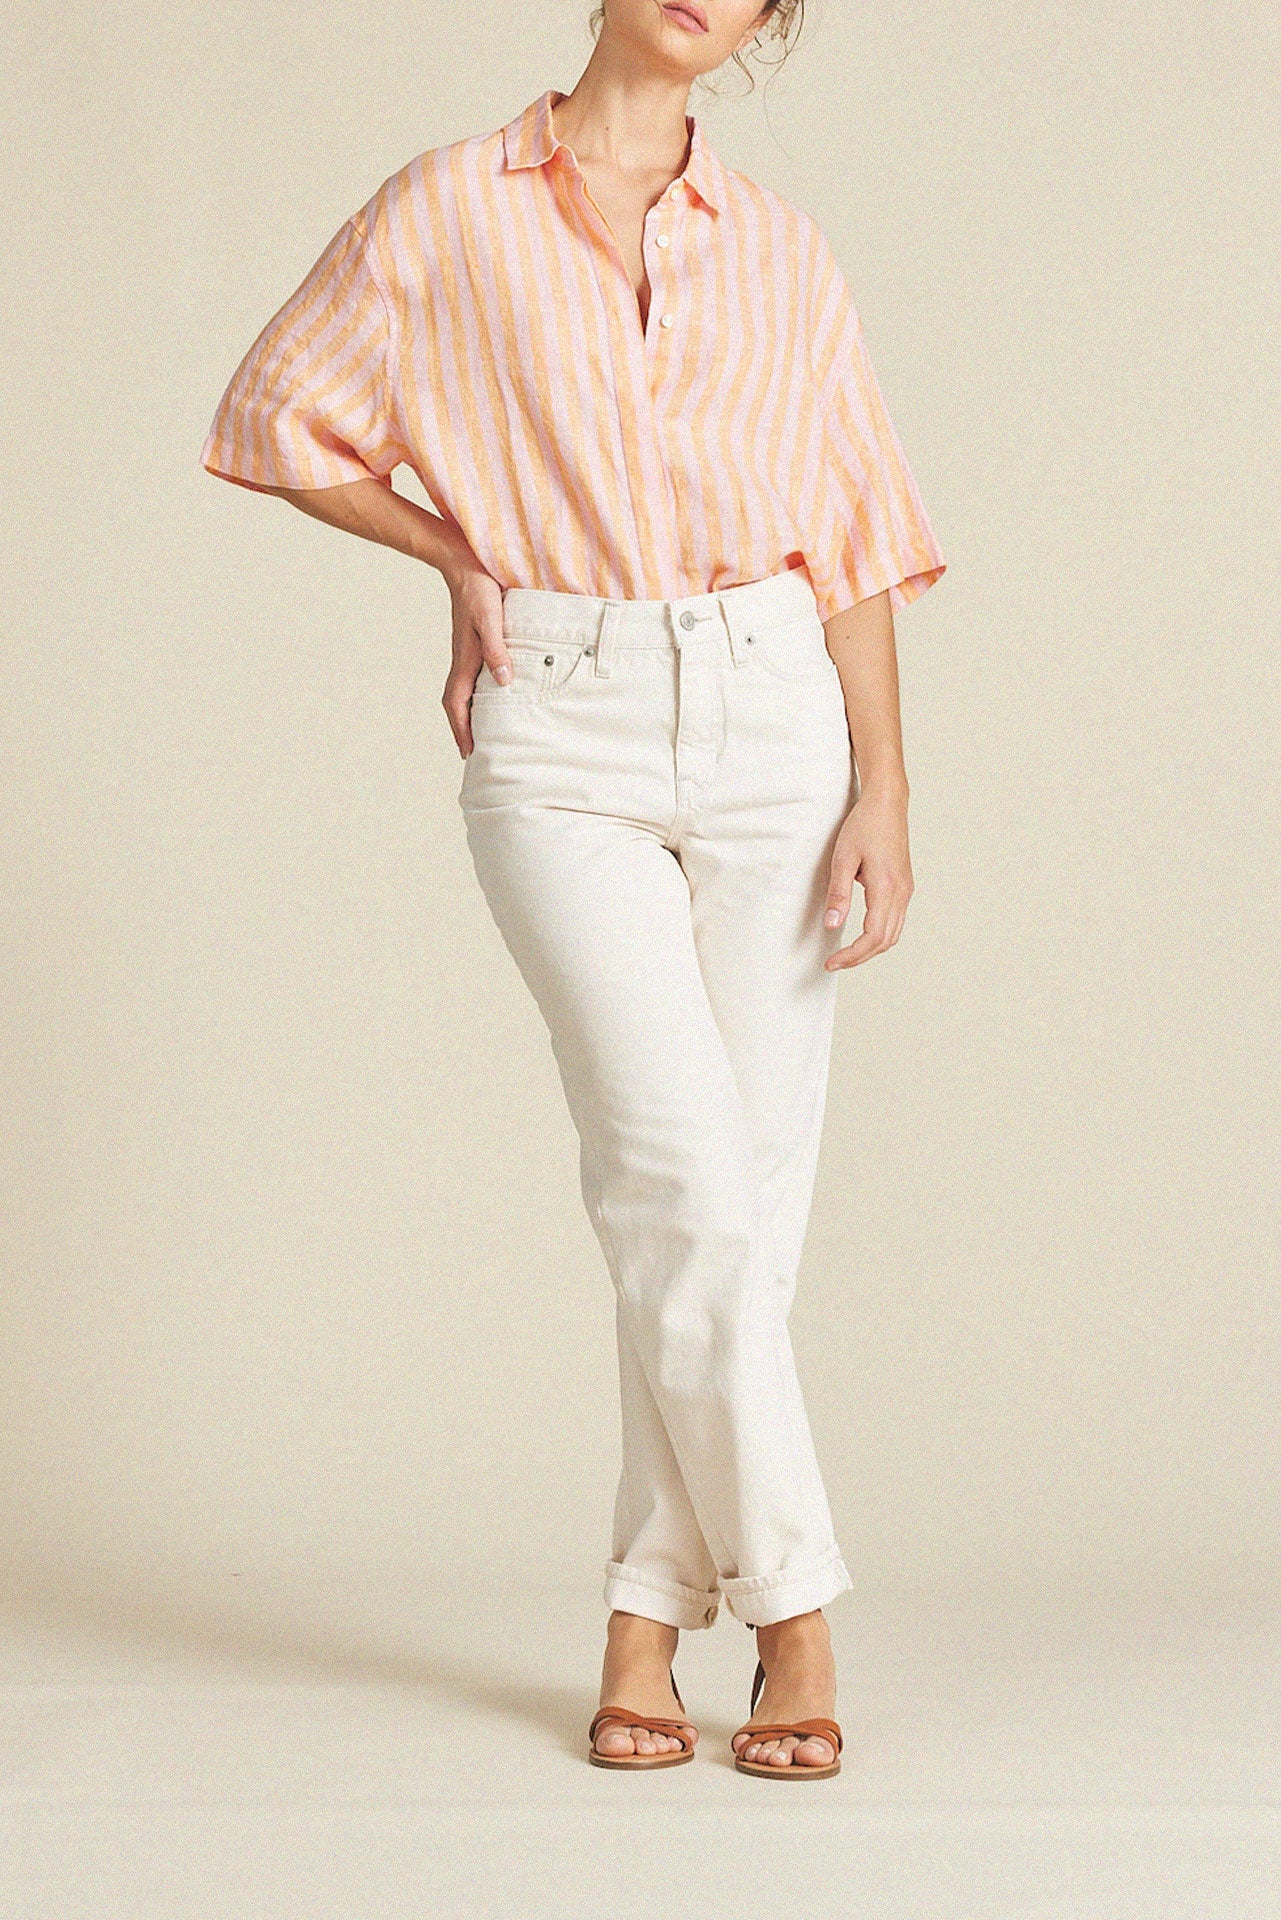 Sienna Shirt Creamsicle Stripe